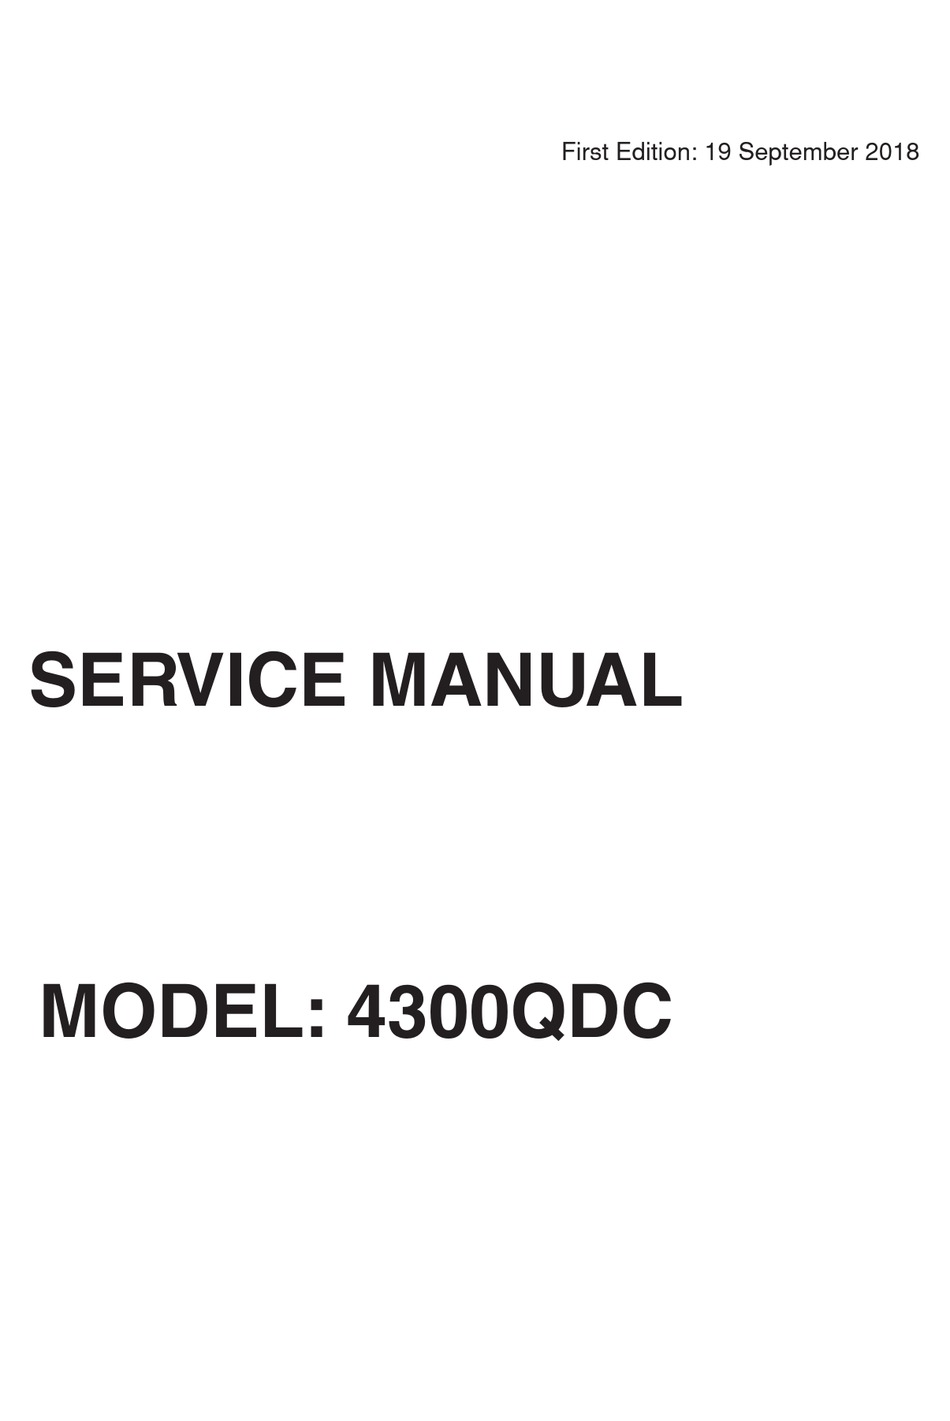 JANOME 4300QDC SERVICE MANUAL Pdf Download | ManualsLib